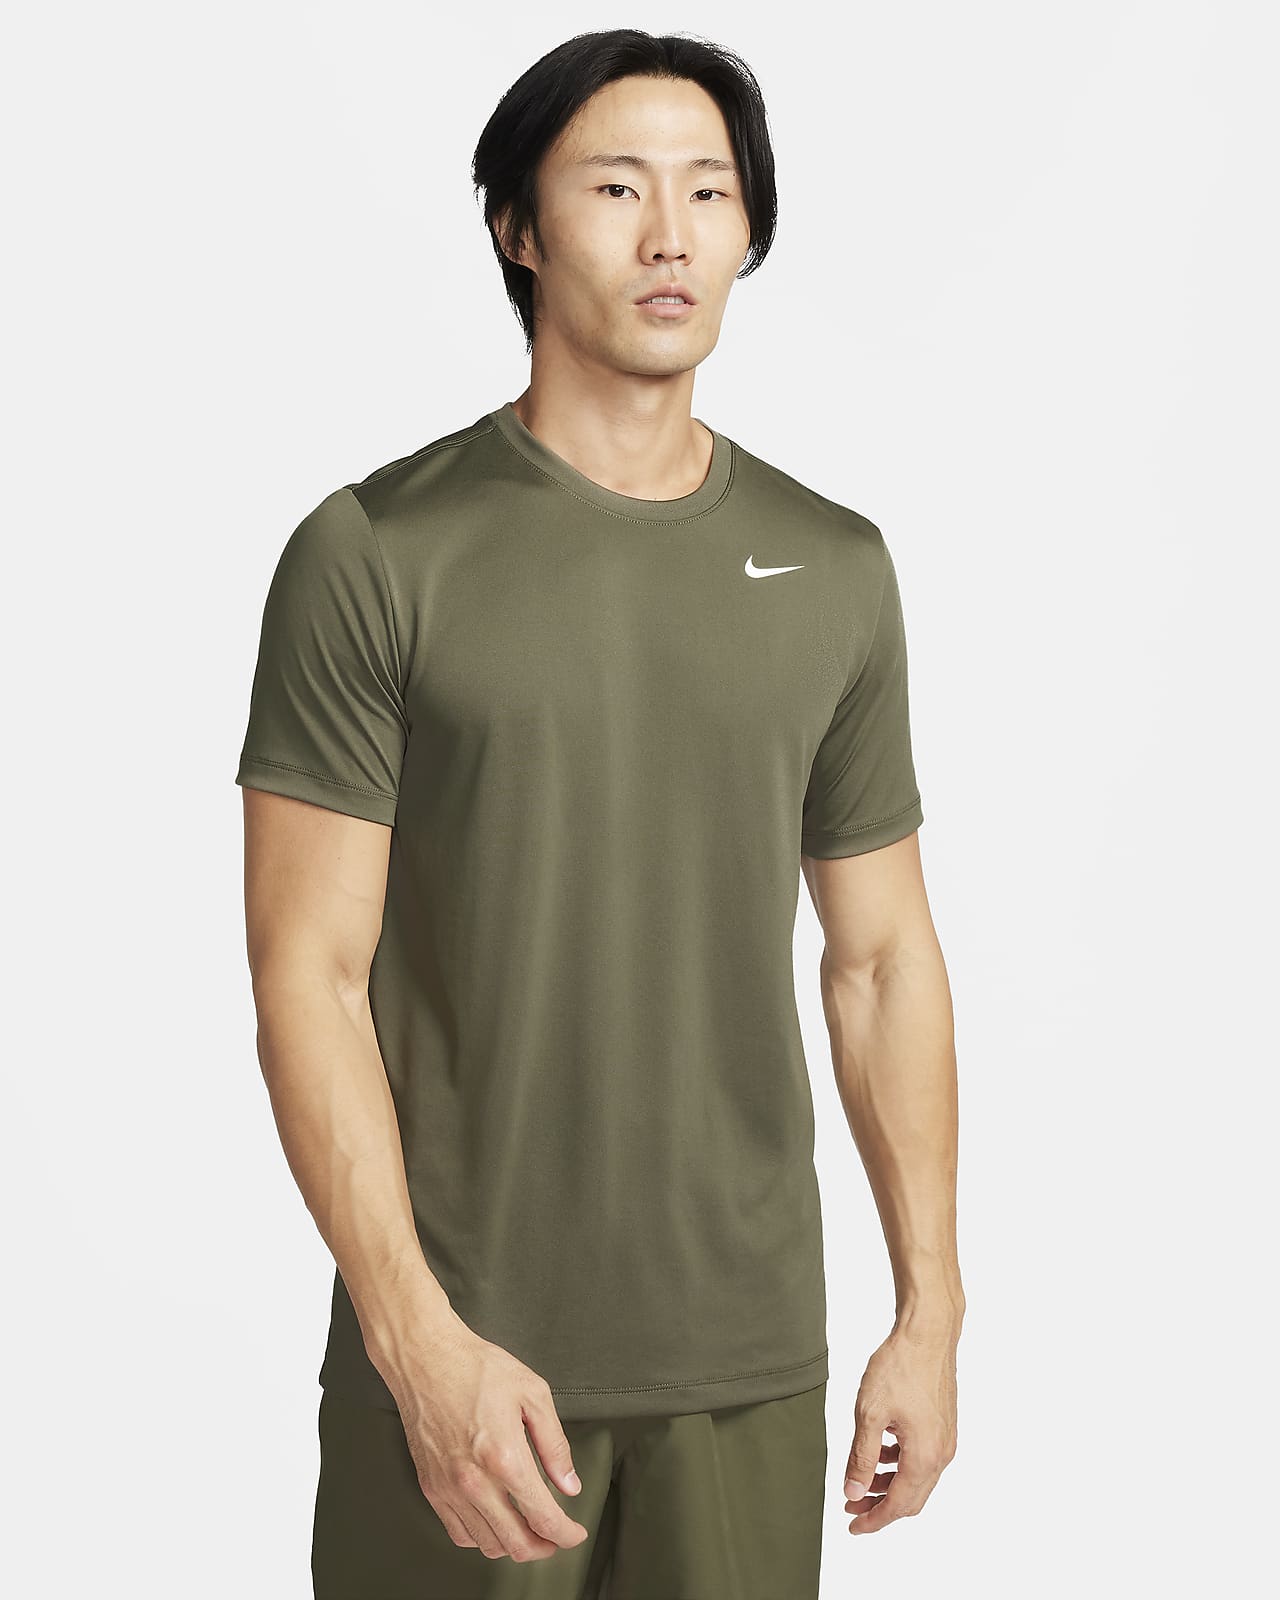 Nike Dri-FIT Men's Fitness T-Shirt.